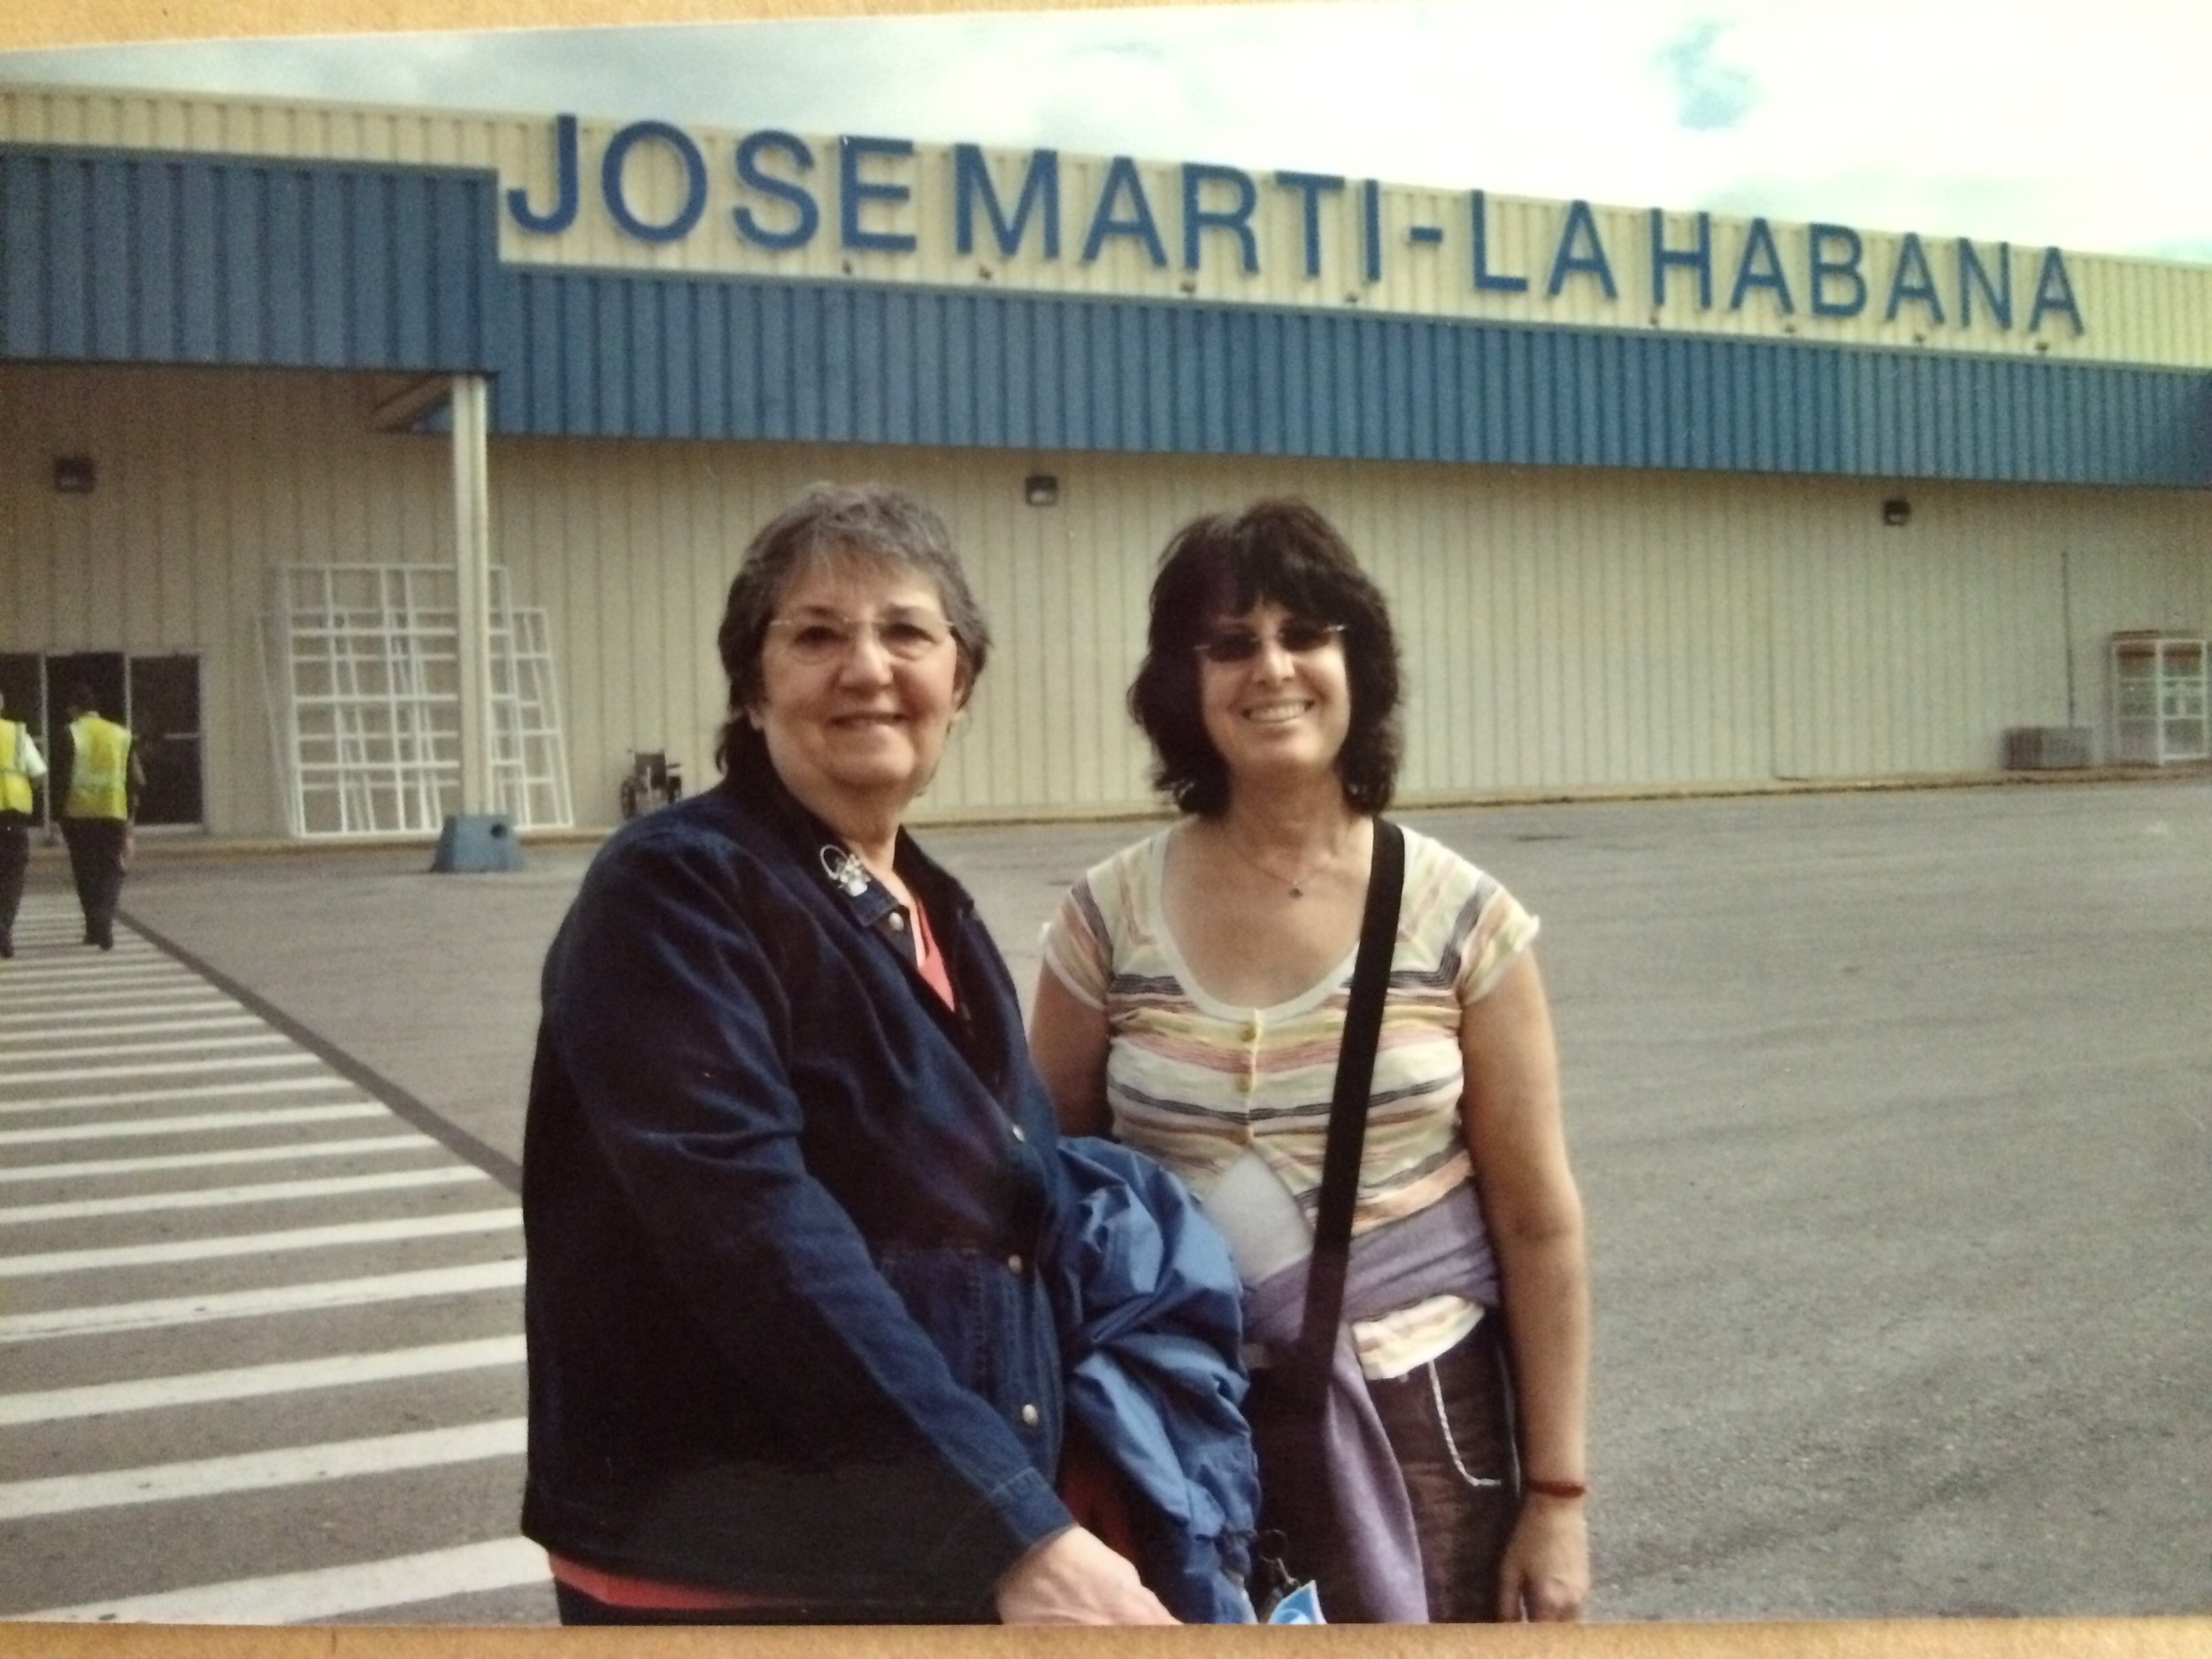 Miriam Bradman and her mother, Pola Bradman, at the José Martí International Airport in Cuba in 2008.